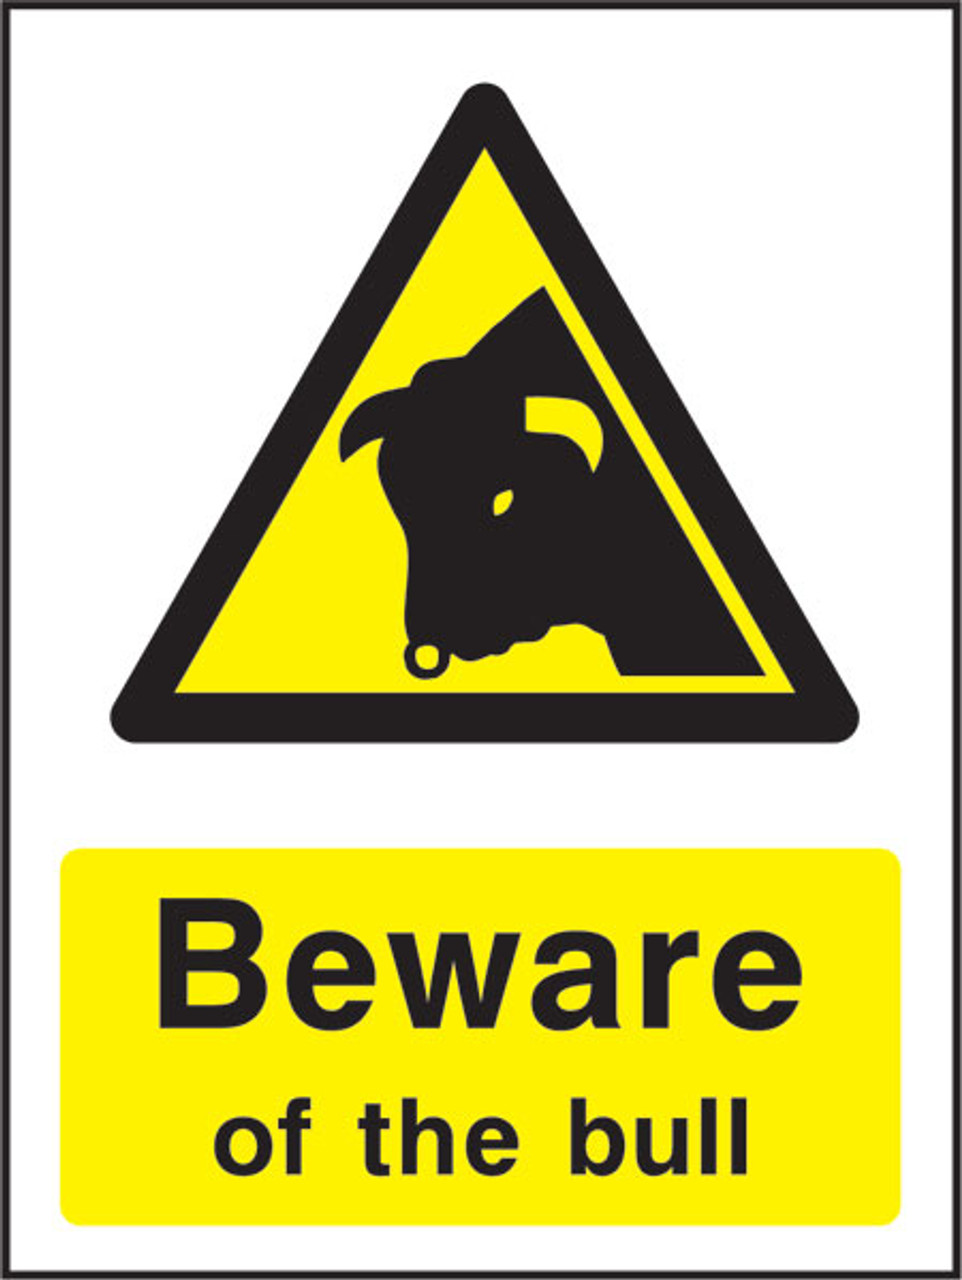 Beware of the bull